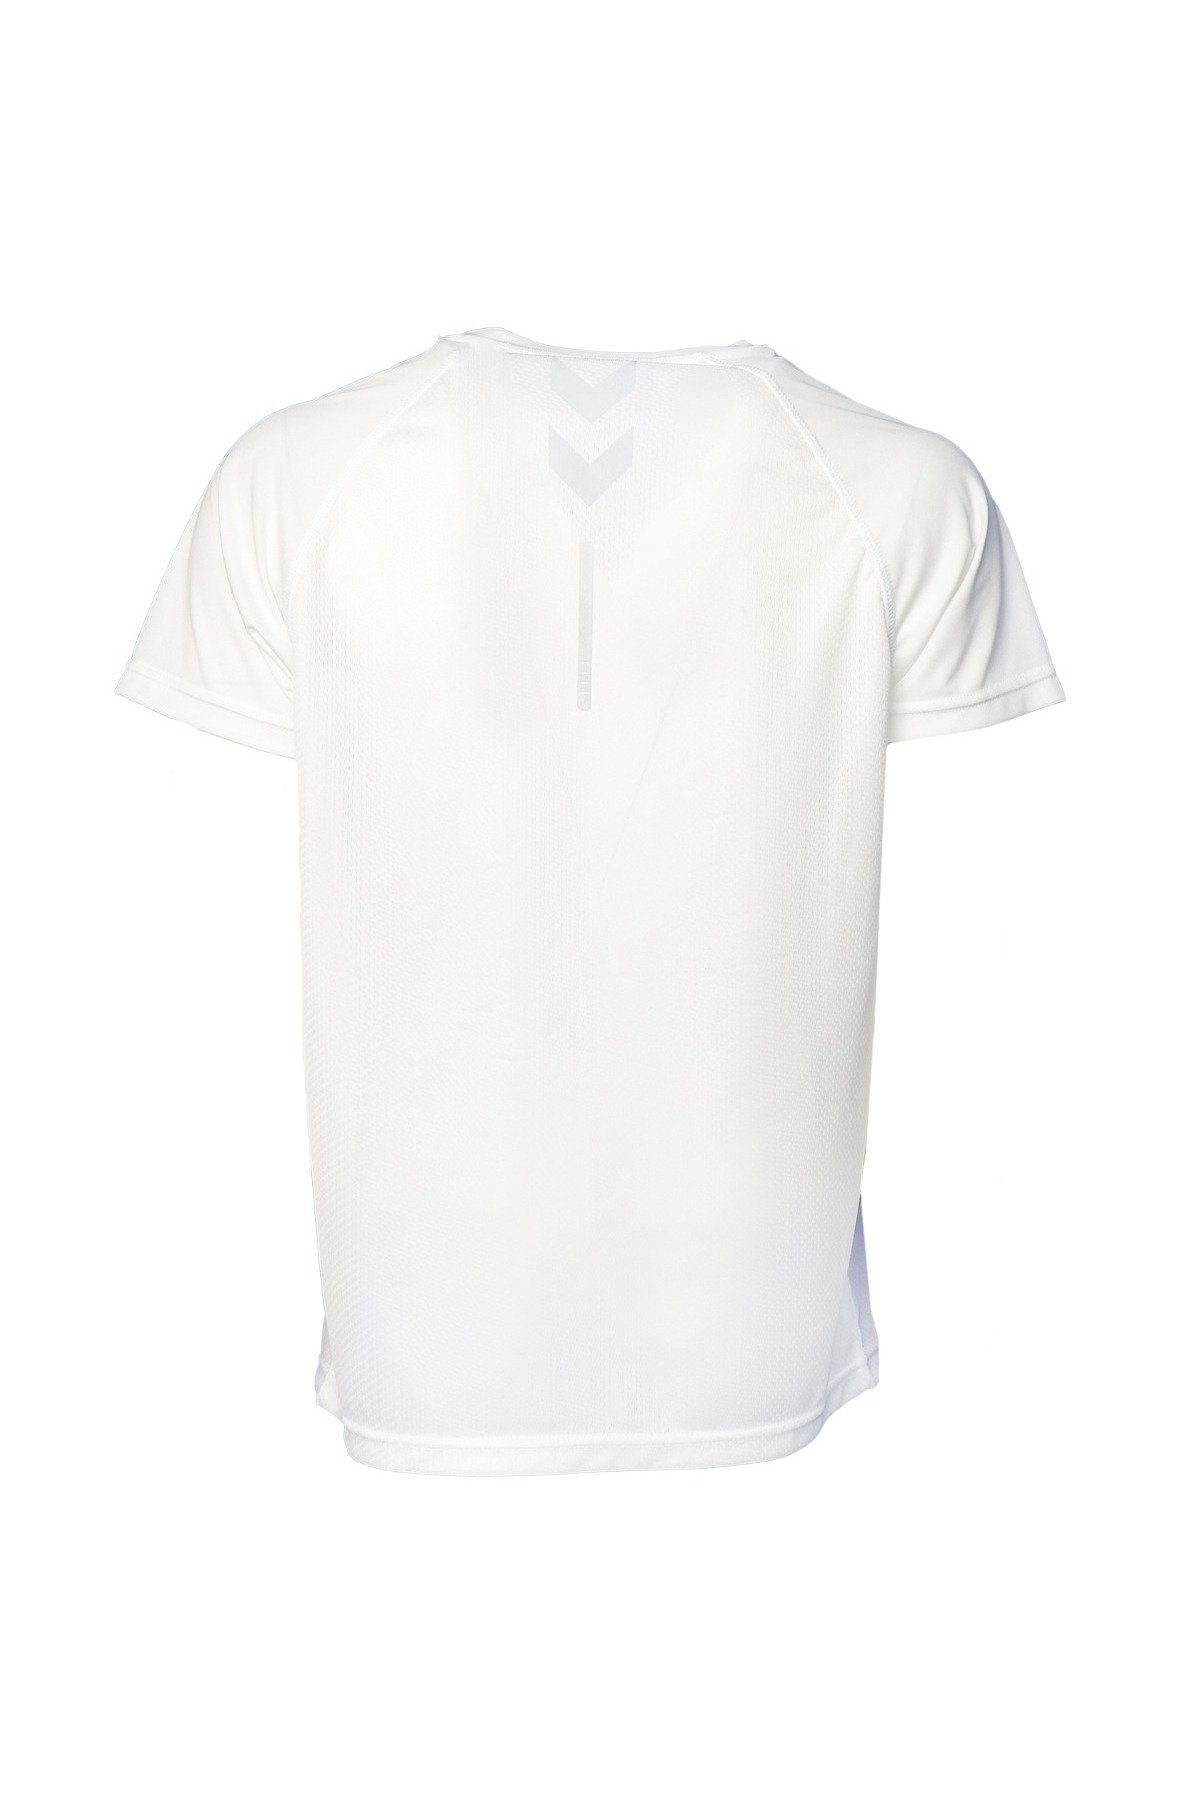 HUMMEL تی شرت یقه خدمه سفید مردانه Juan